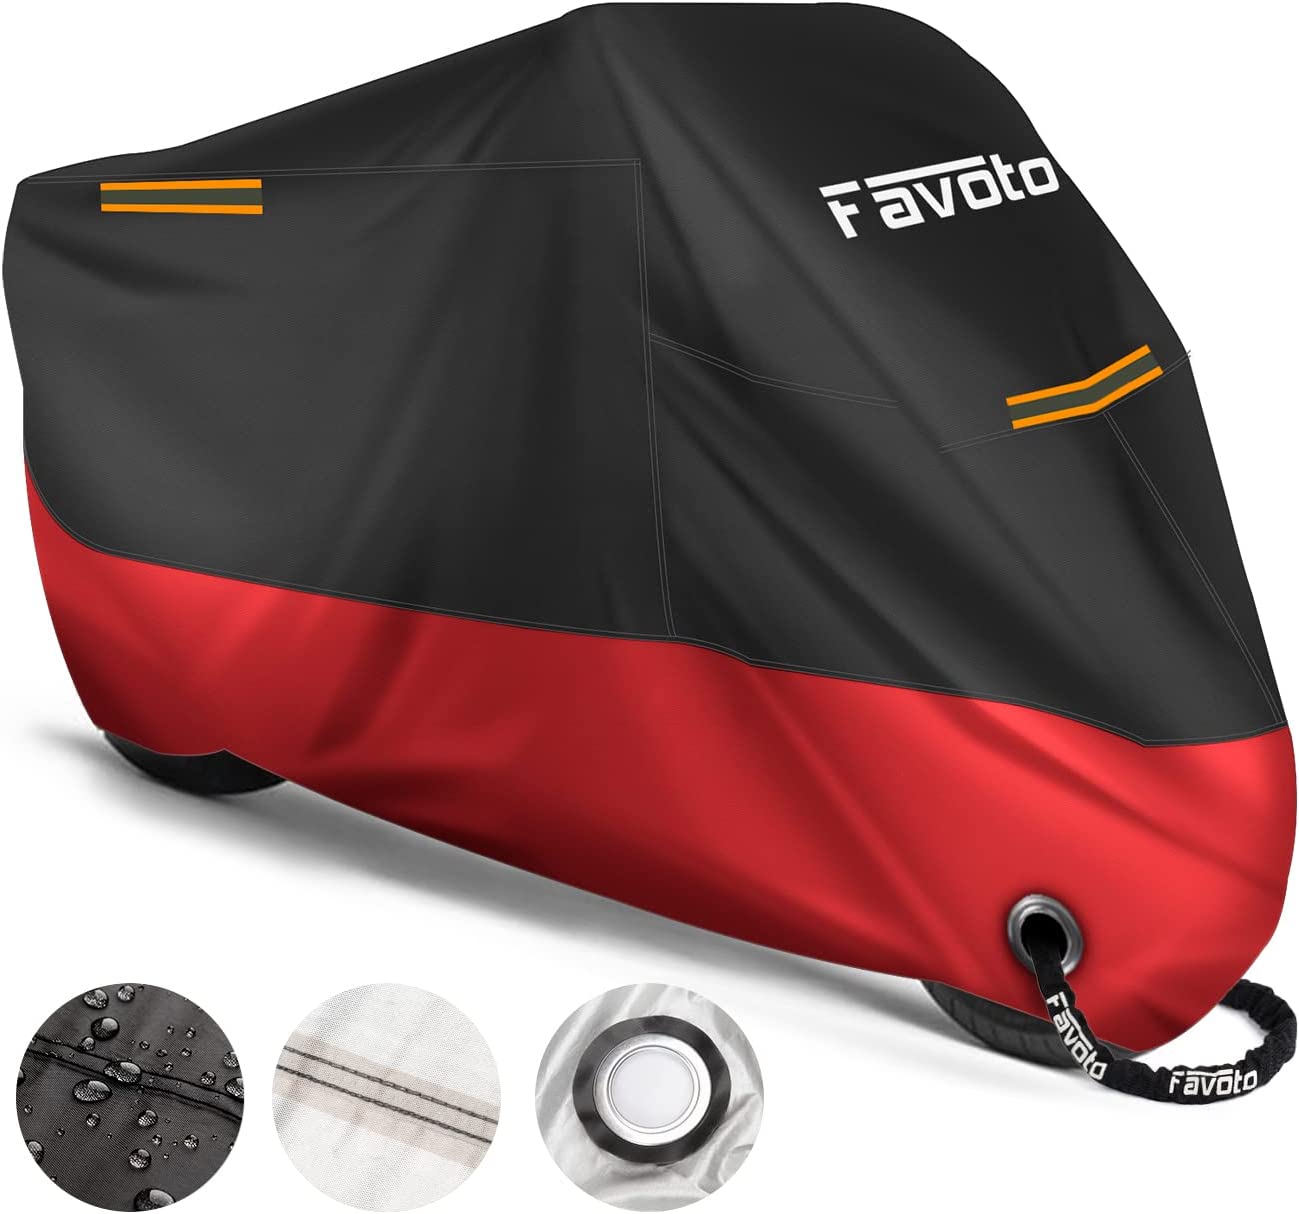 chollo Favoto Funda para Moto Cubierta de Moto 210D - 265x105x125cm Negro+Rojo